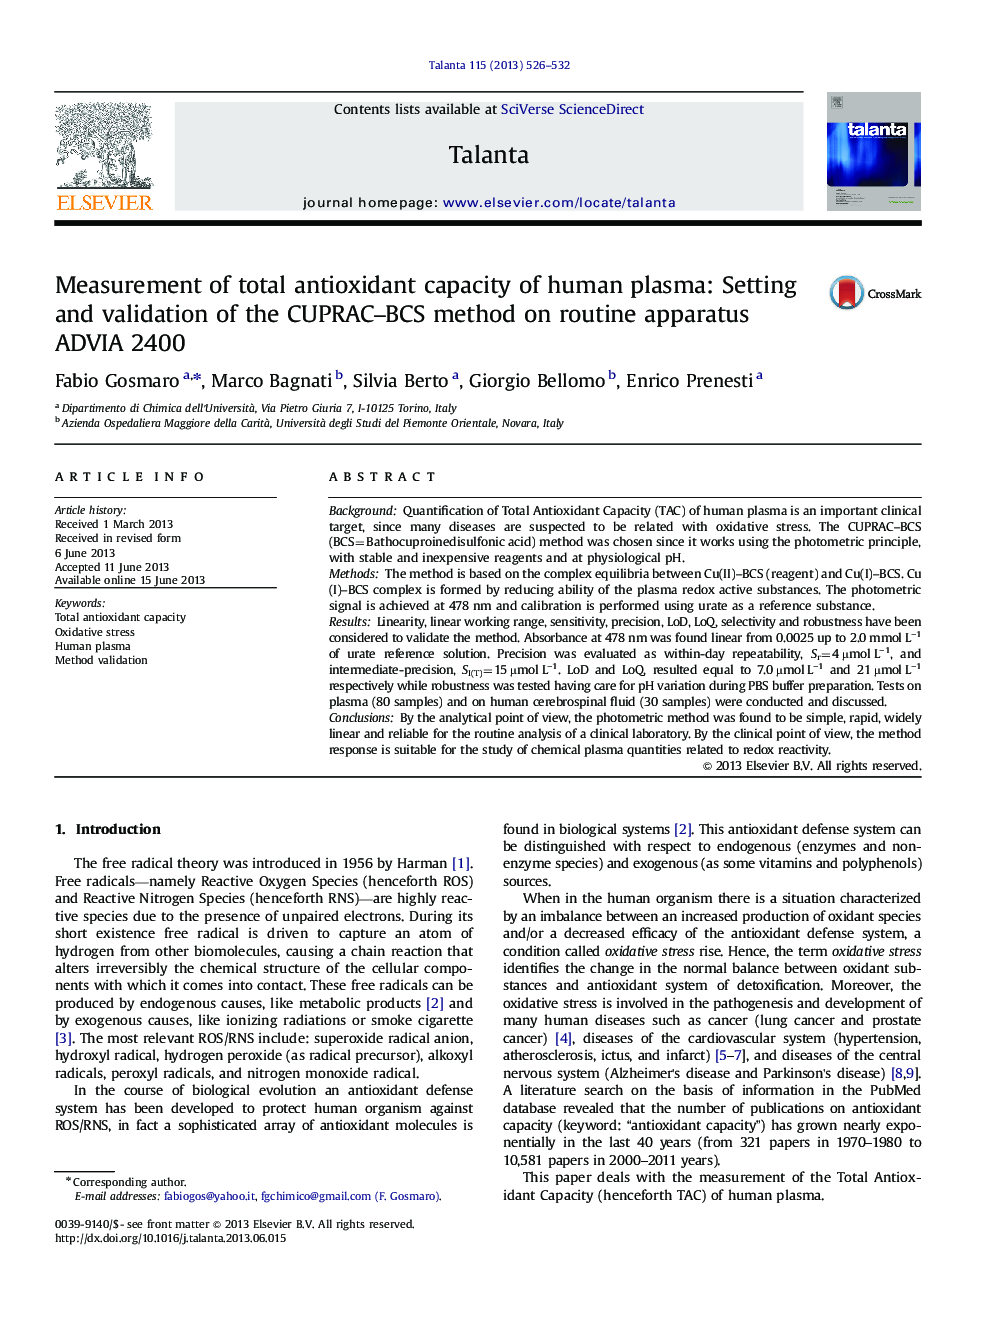 Measurement of total antioxidant capacity of human plasma: Setting and validation of the CUPRAC-BCS method on routine apparatus ADVIA 2400